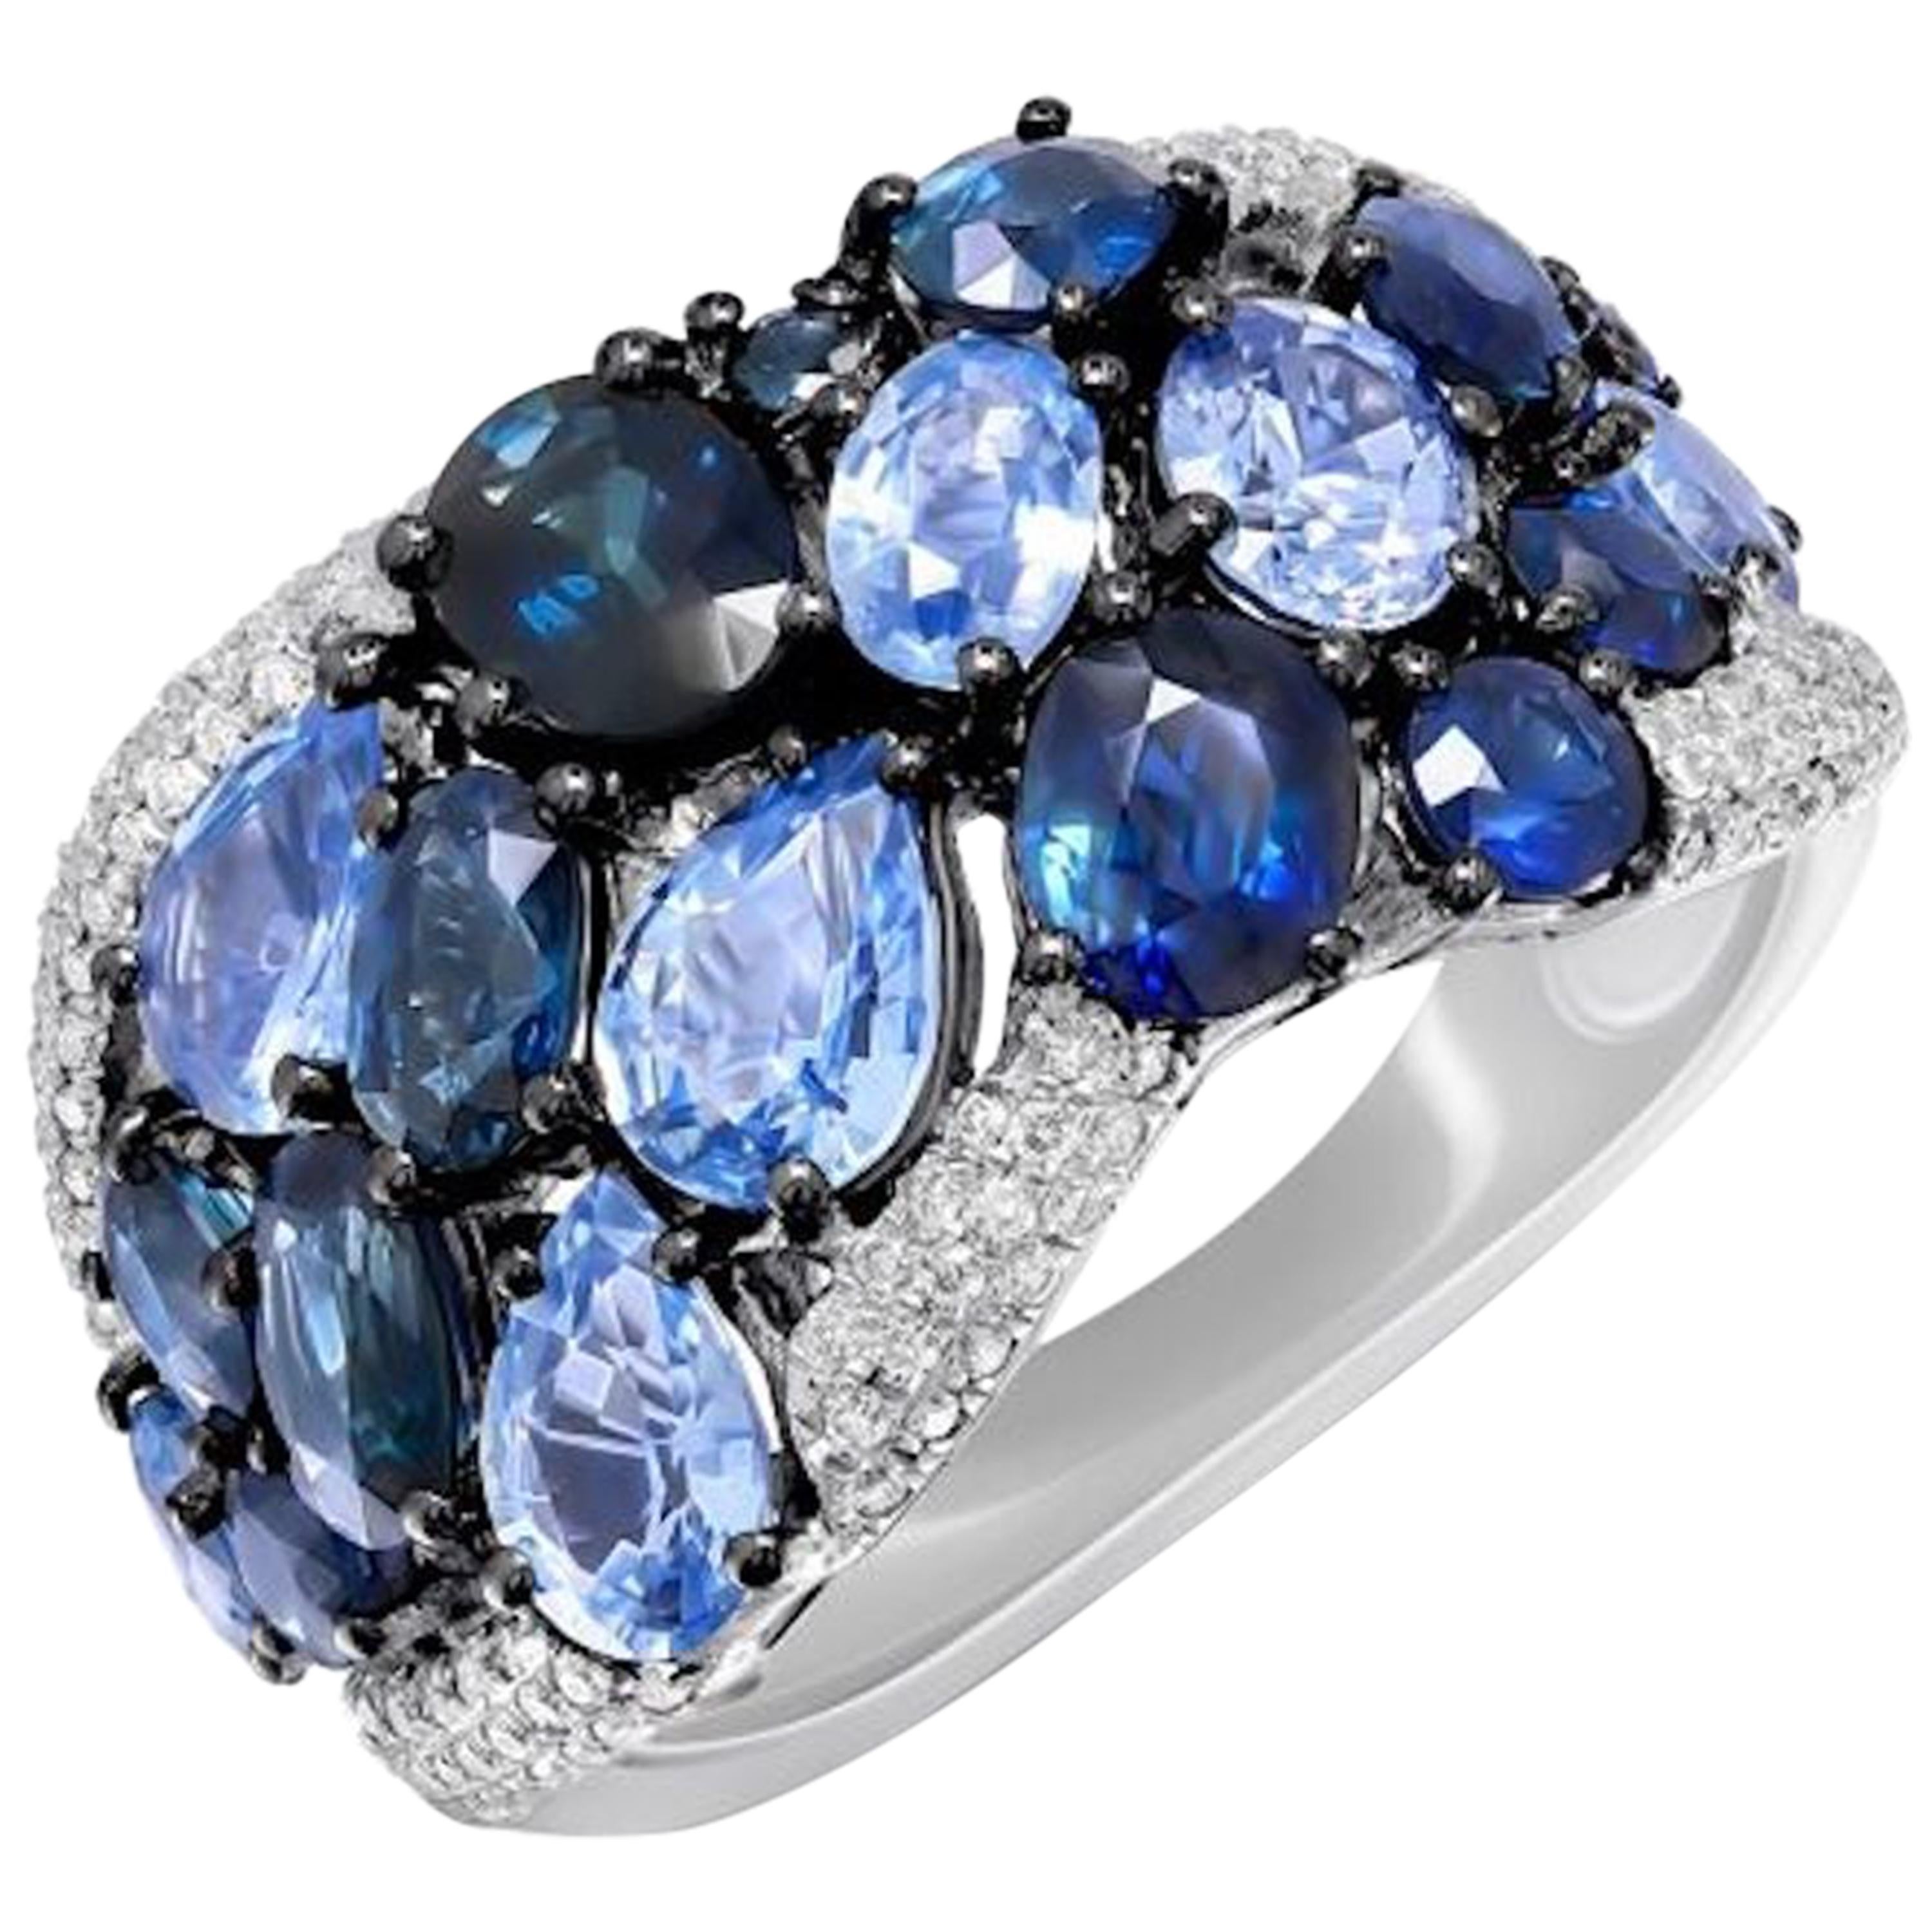 Impressive Blue Sapphire Diamond Cocktail White 14 Karat Gold Ring for Her